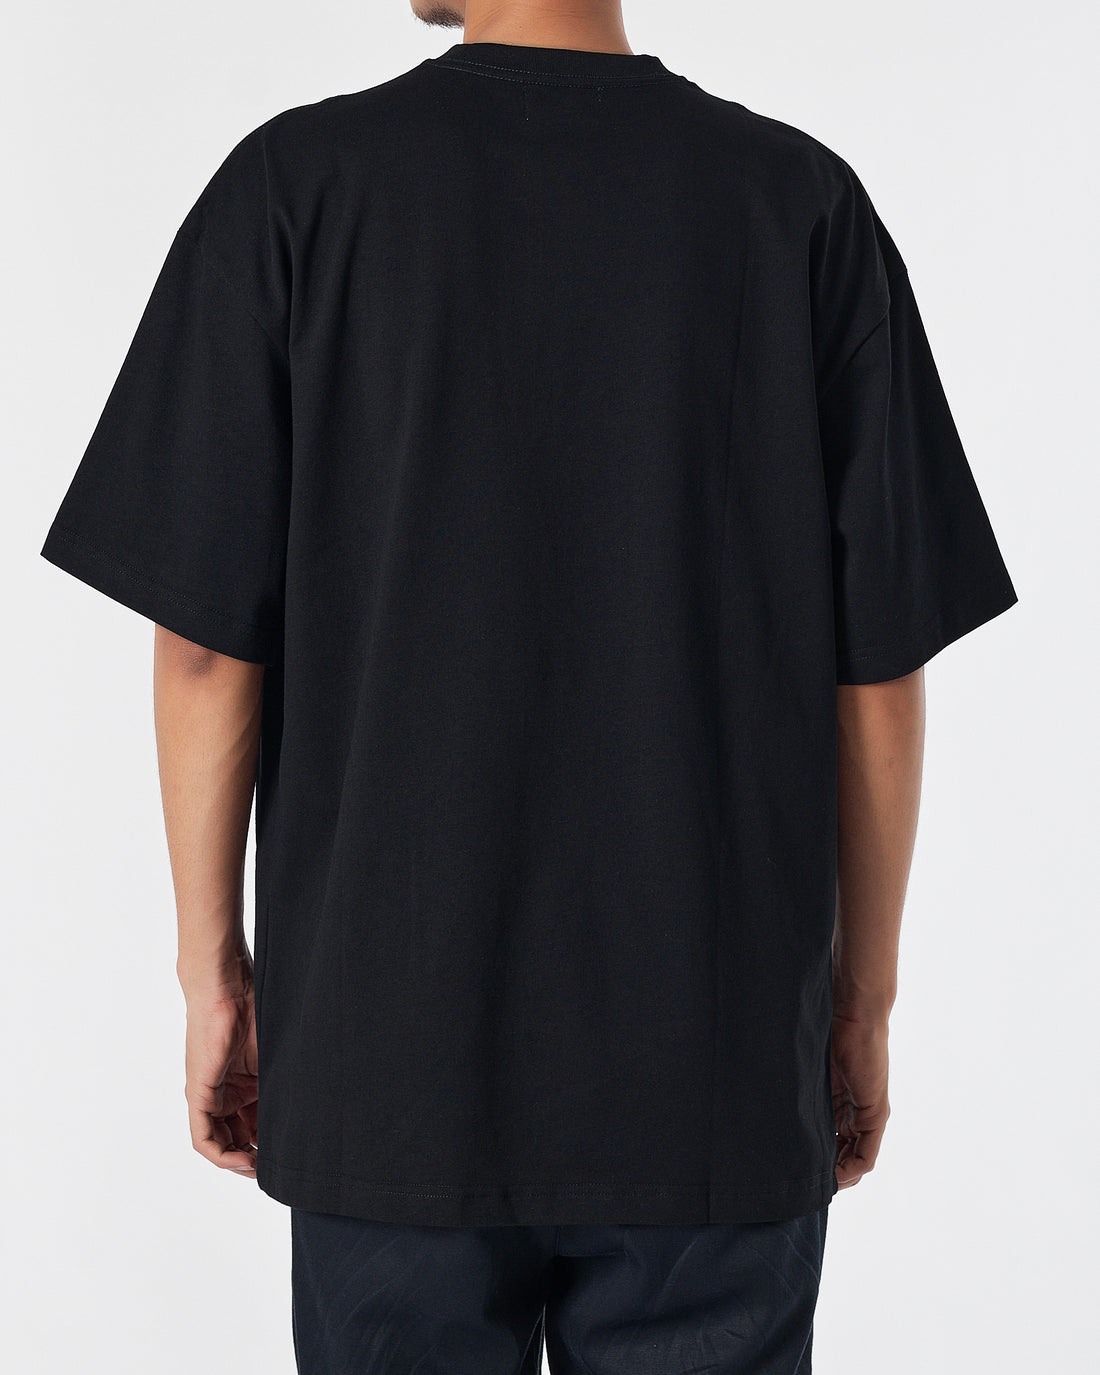 KEN Flower Embroidered Men Black T-Shirt 17.90